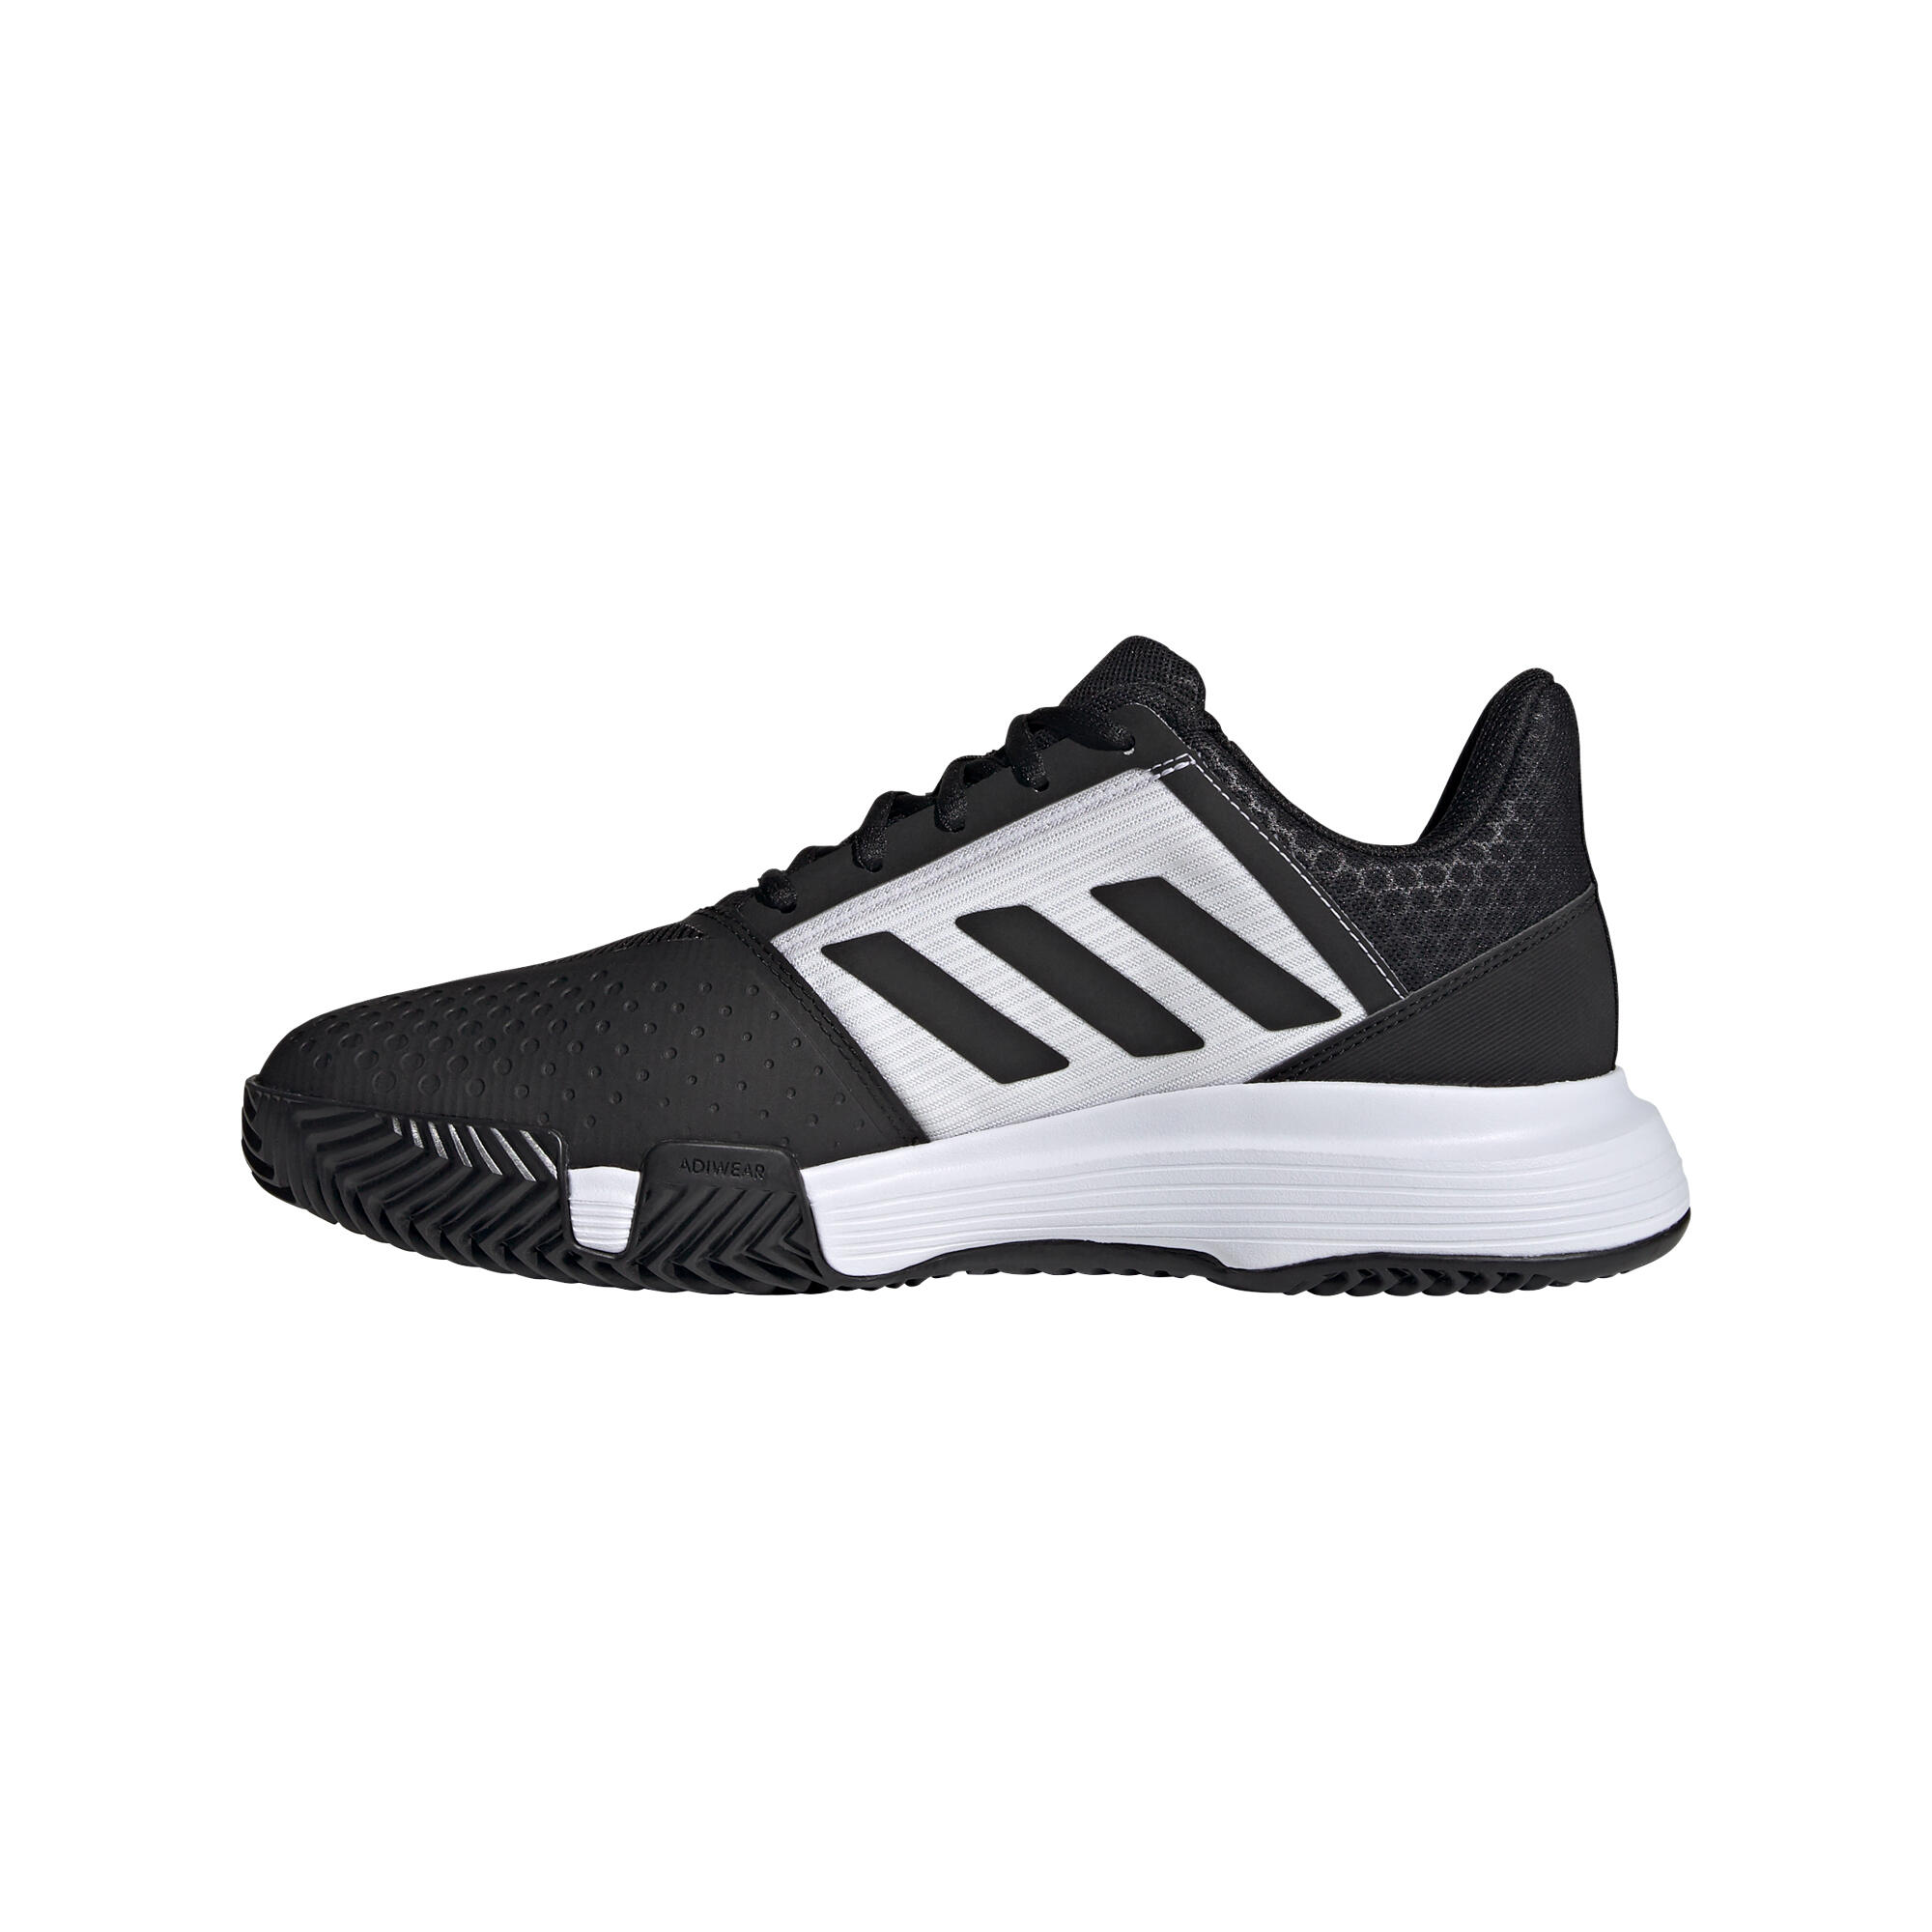 adidas men's clay court tennis shoes